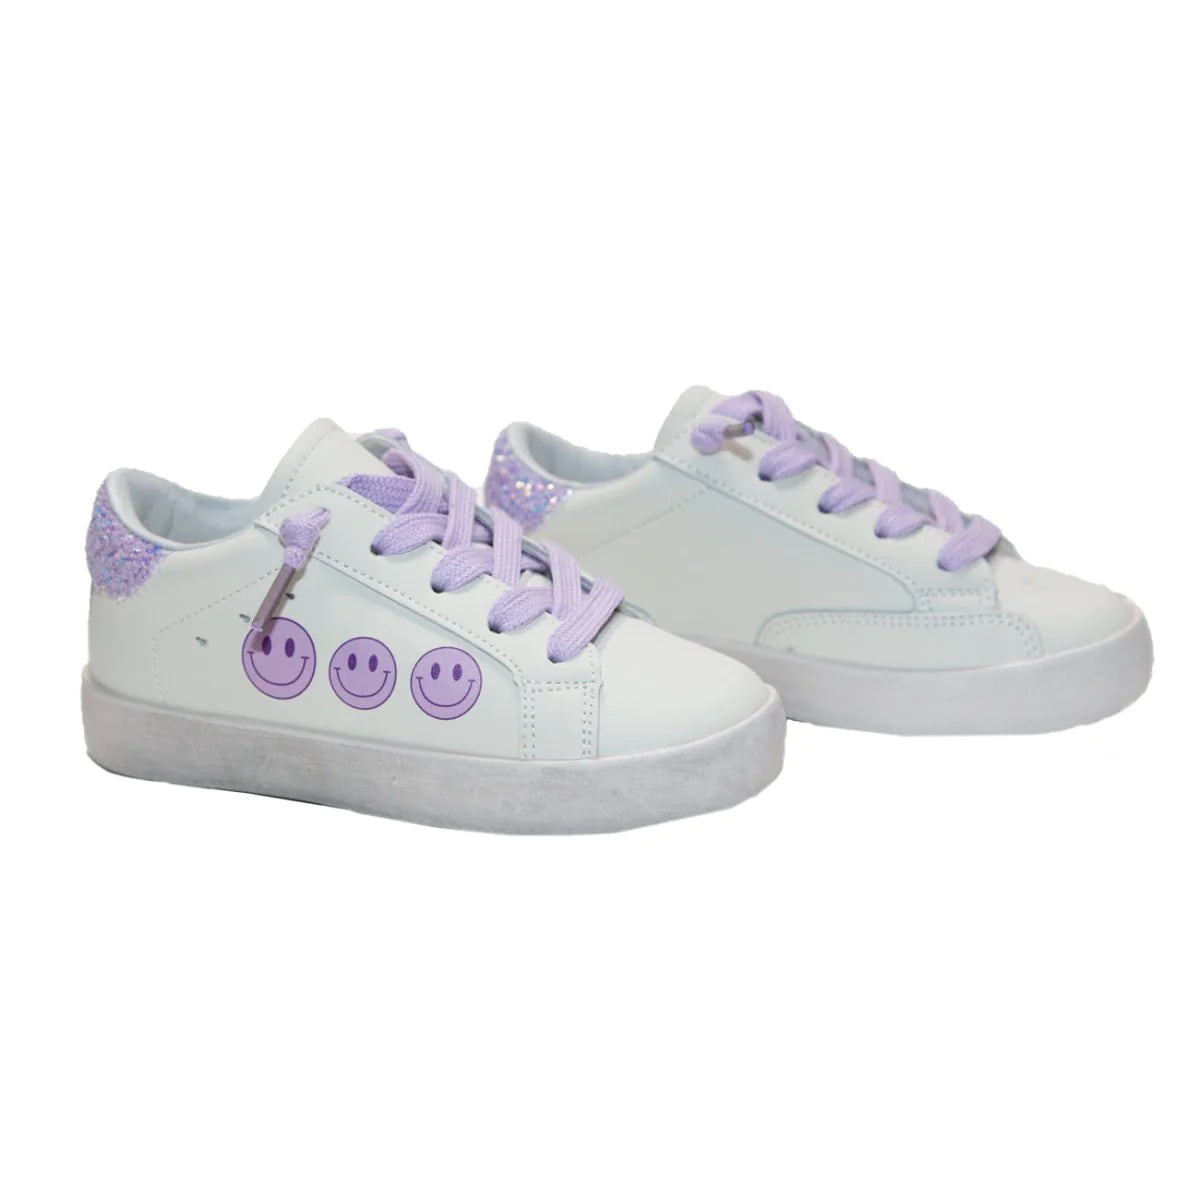 Mini Dreamers violet smiley face sneakers – The Original Shop